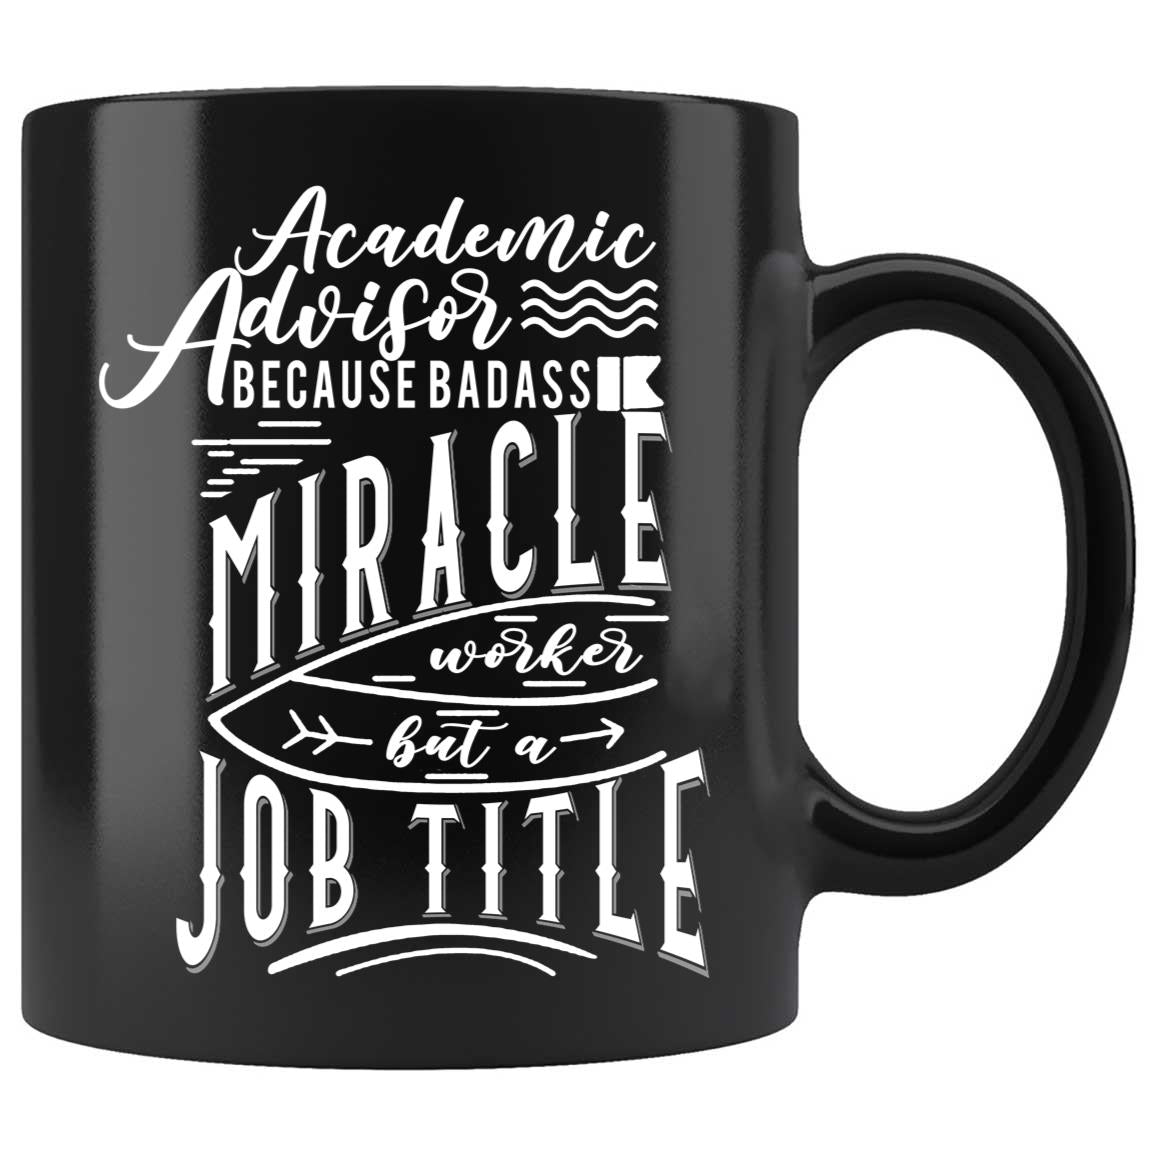 Skitongifts Coffee Mug Funny Ceramic Novelty NH07012022 - Academic Advisor Badass Miracle Worker Job Title O9Bcg0E